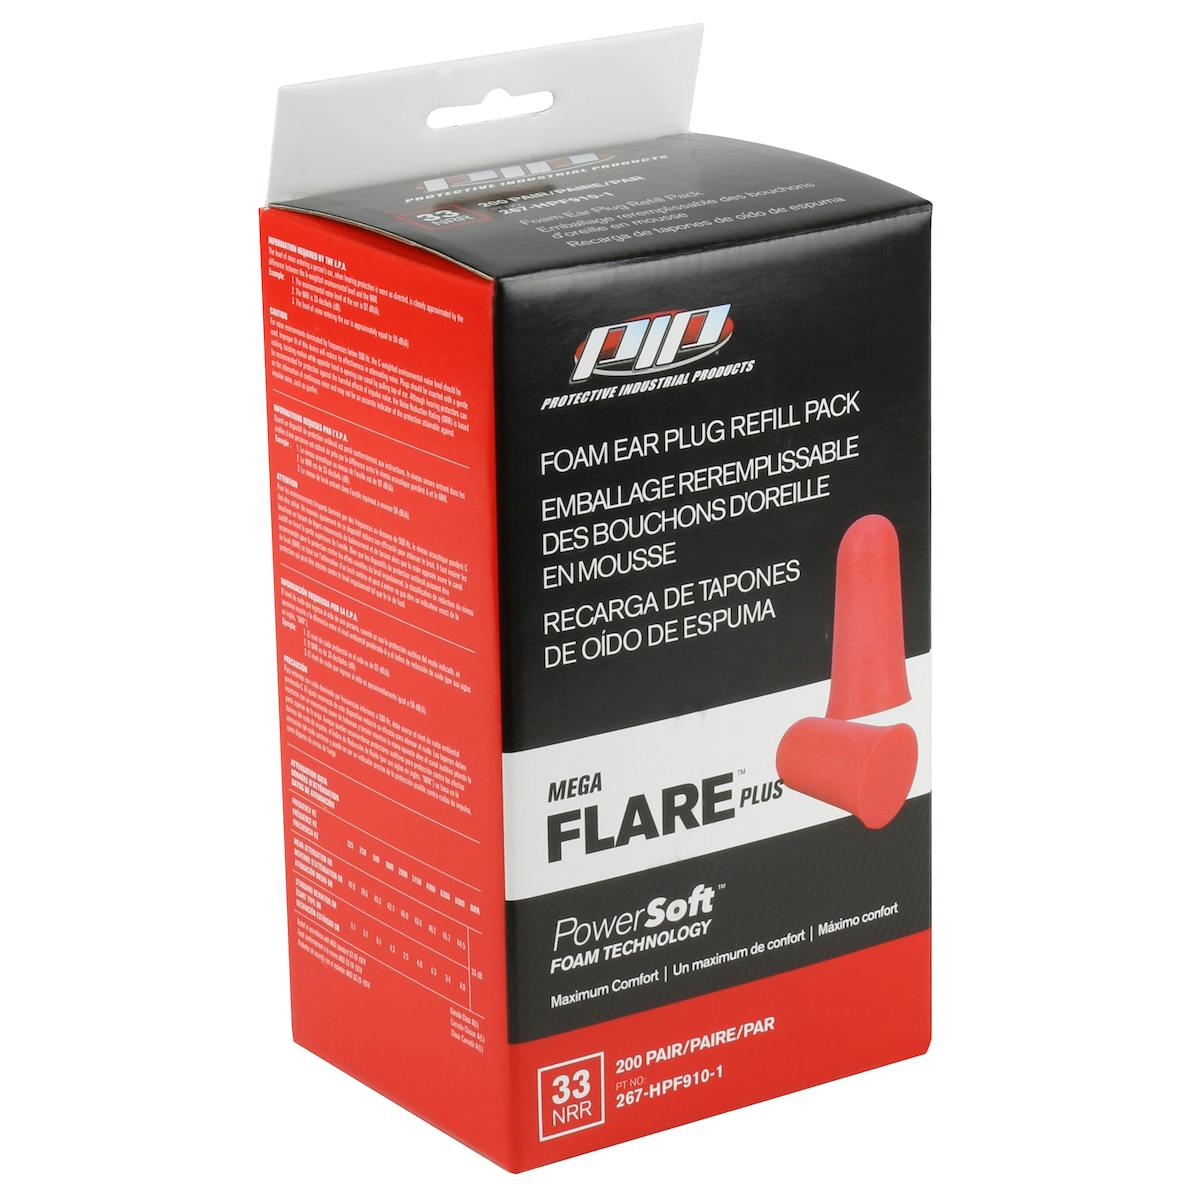 Disposable Soft Polyurethane Foam Ear Plugs - Dispenser Refill Pack, Red (267-HPF910-1) - OS_0